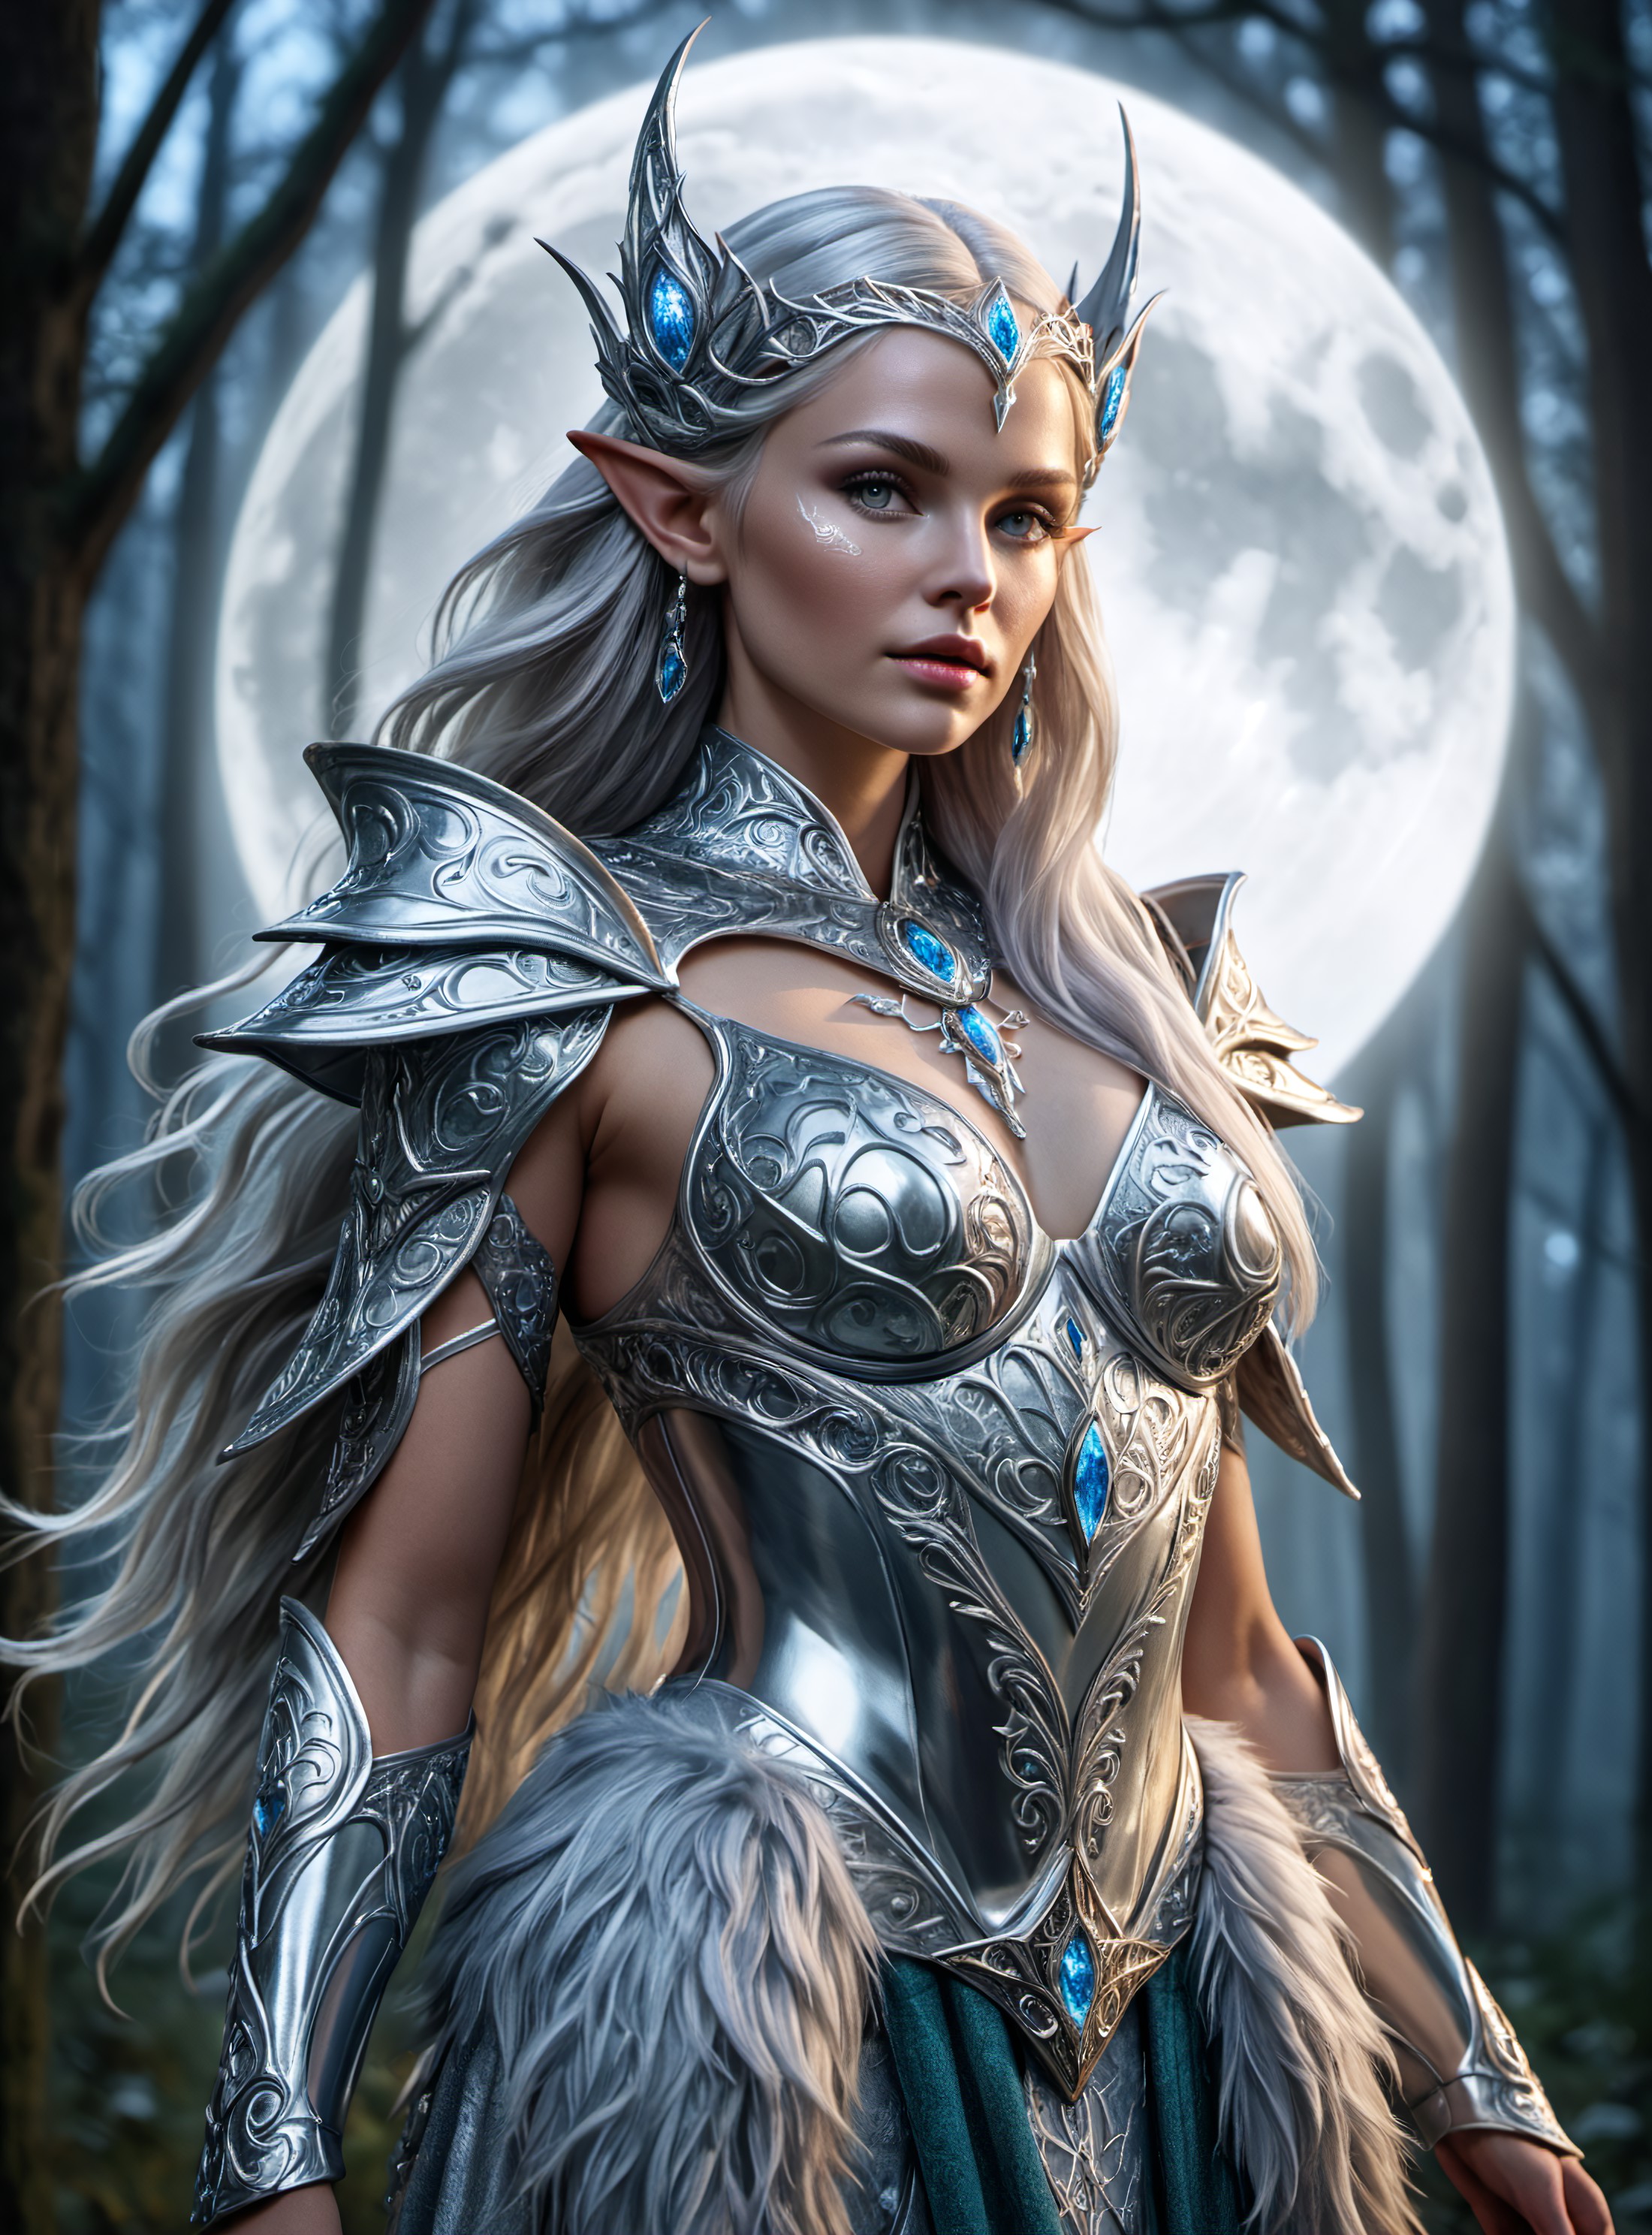 50mm lens
aperture opening of f/4.0
1 girl, beautiful elven maiden:1, silver elven armor:0.8, shoulder portrait, Night, Fo...